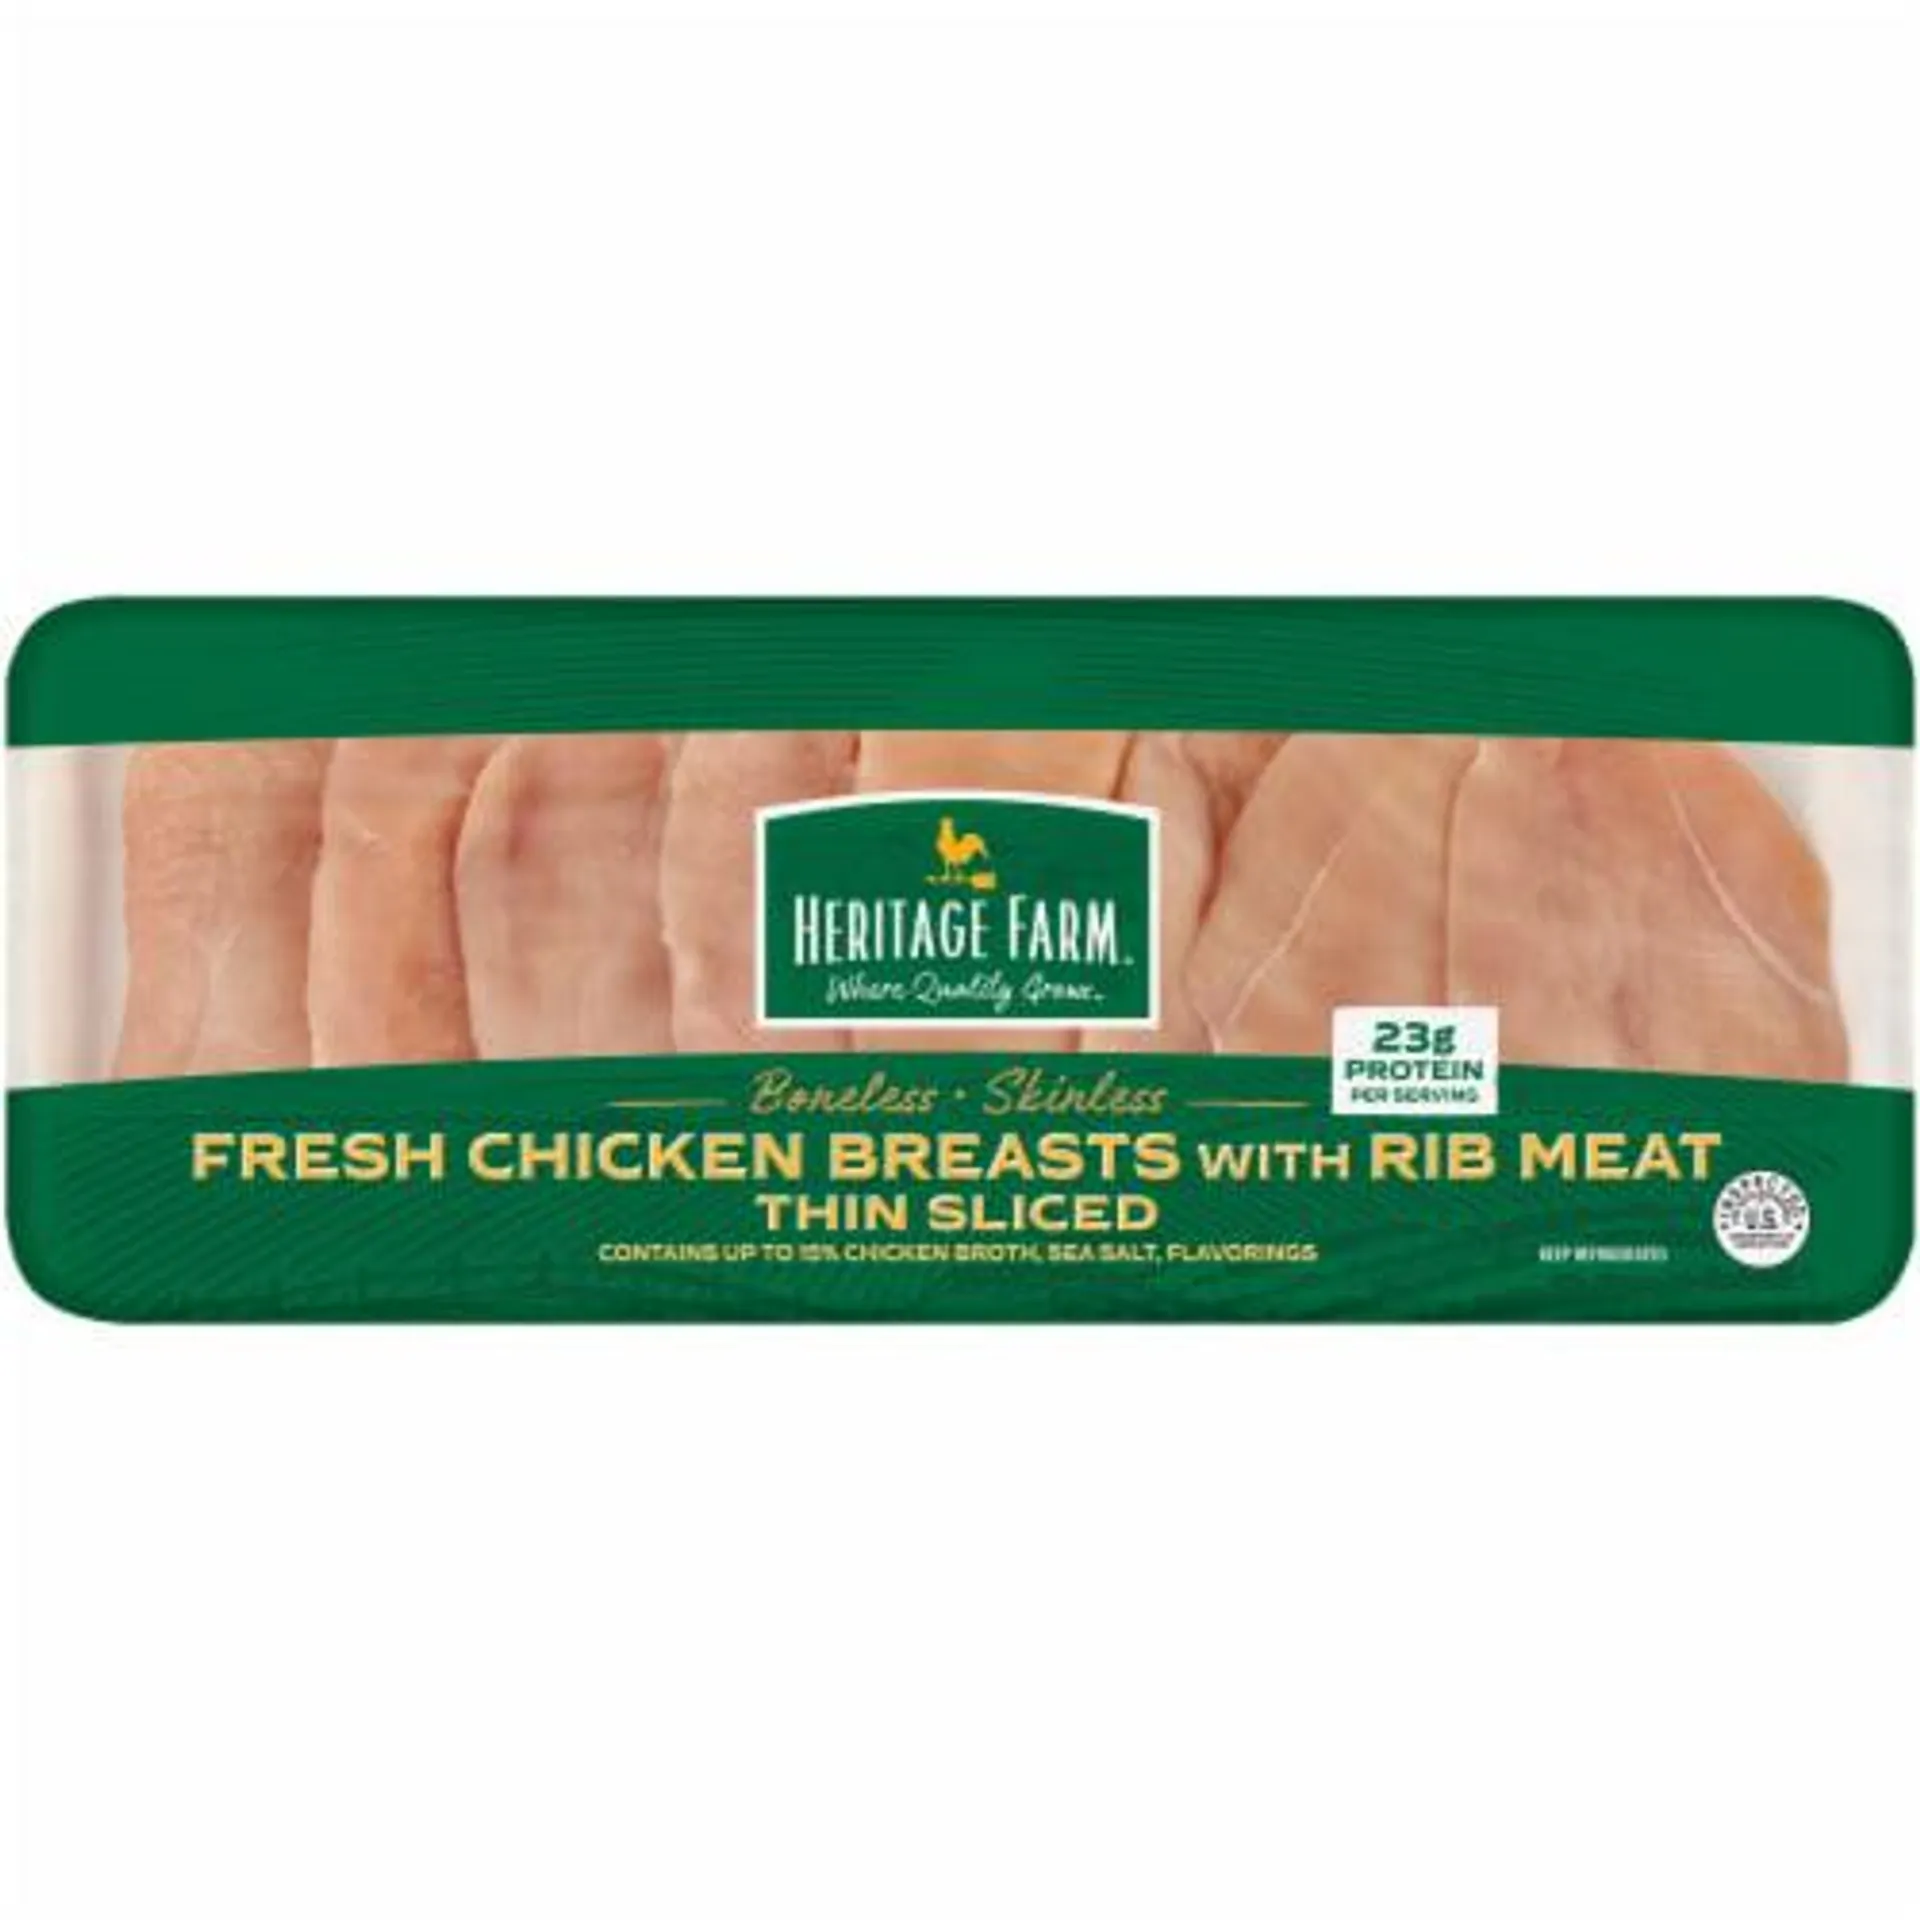 Heritage Farm® Thin Sliced Boneless & Skinless Chicken Breasts